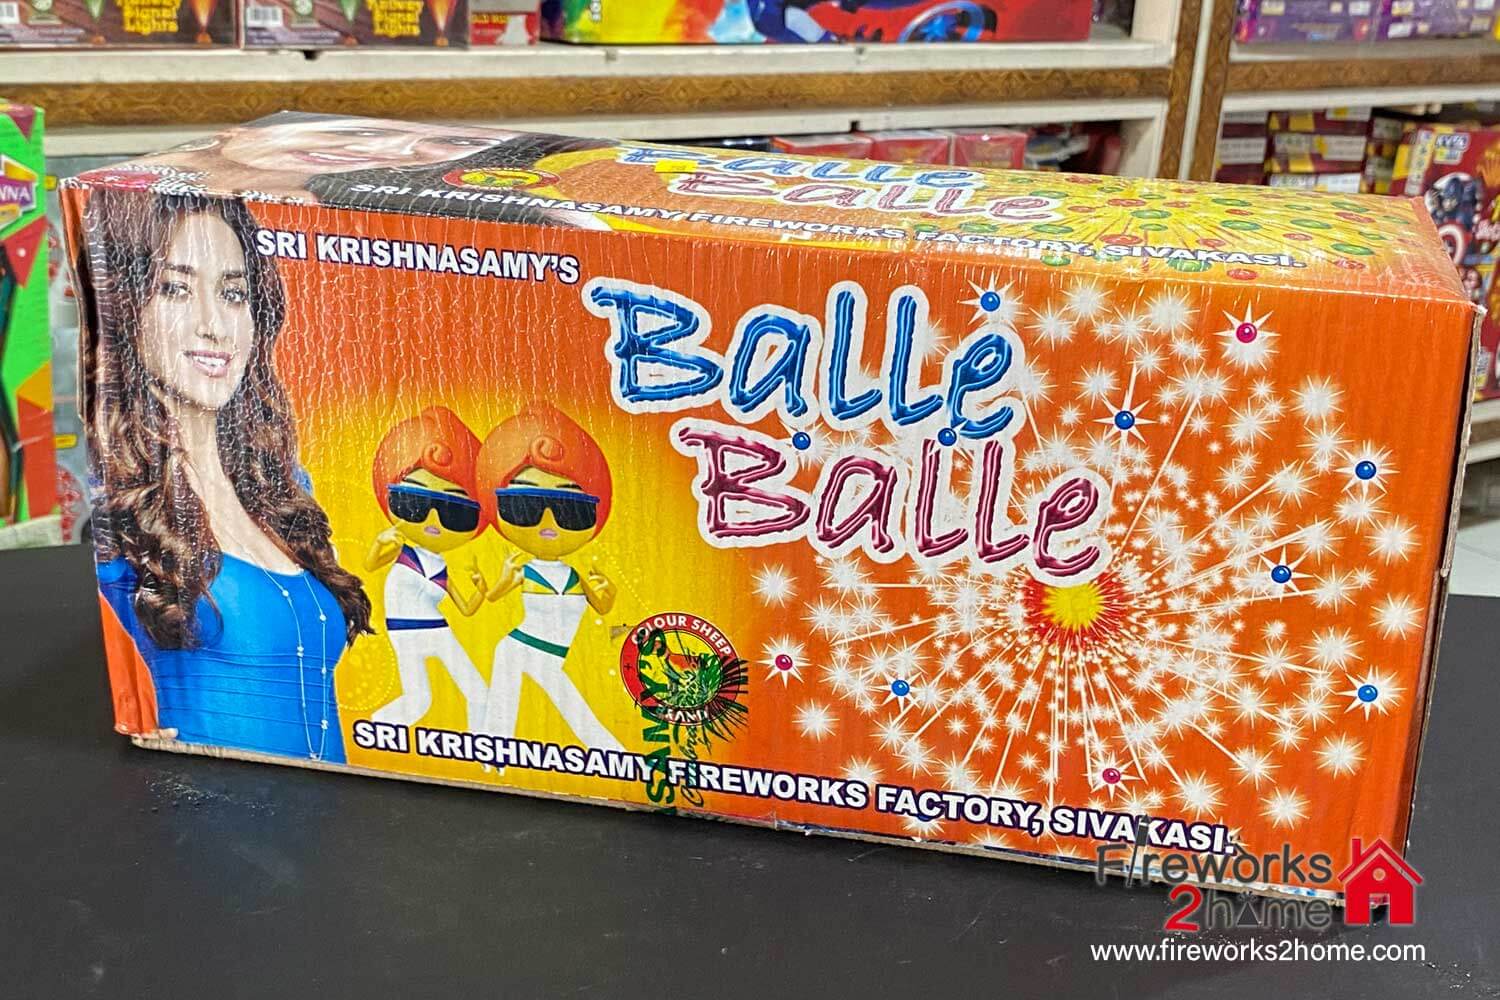 Balle Balle 30 Sky Shots Sky Shot by Sri Krishnasamy's (pieces per box 1)